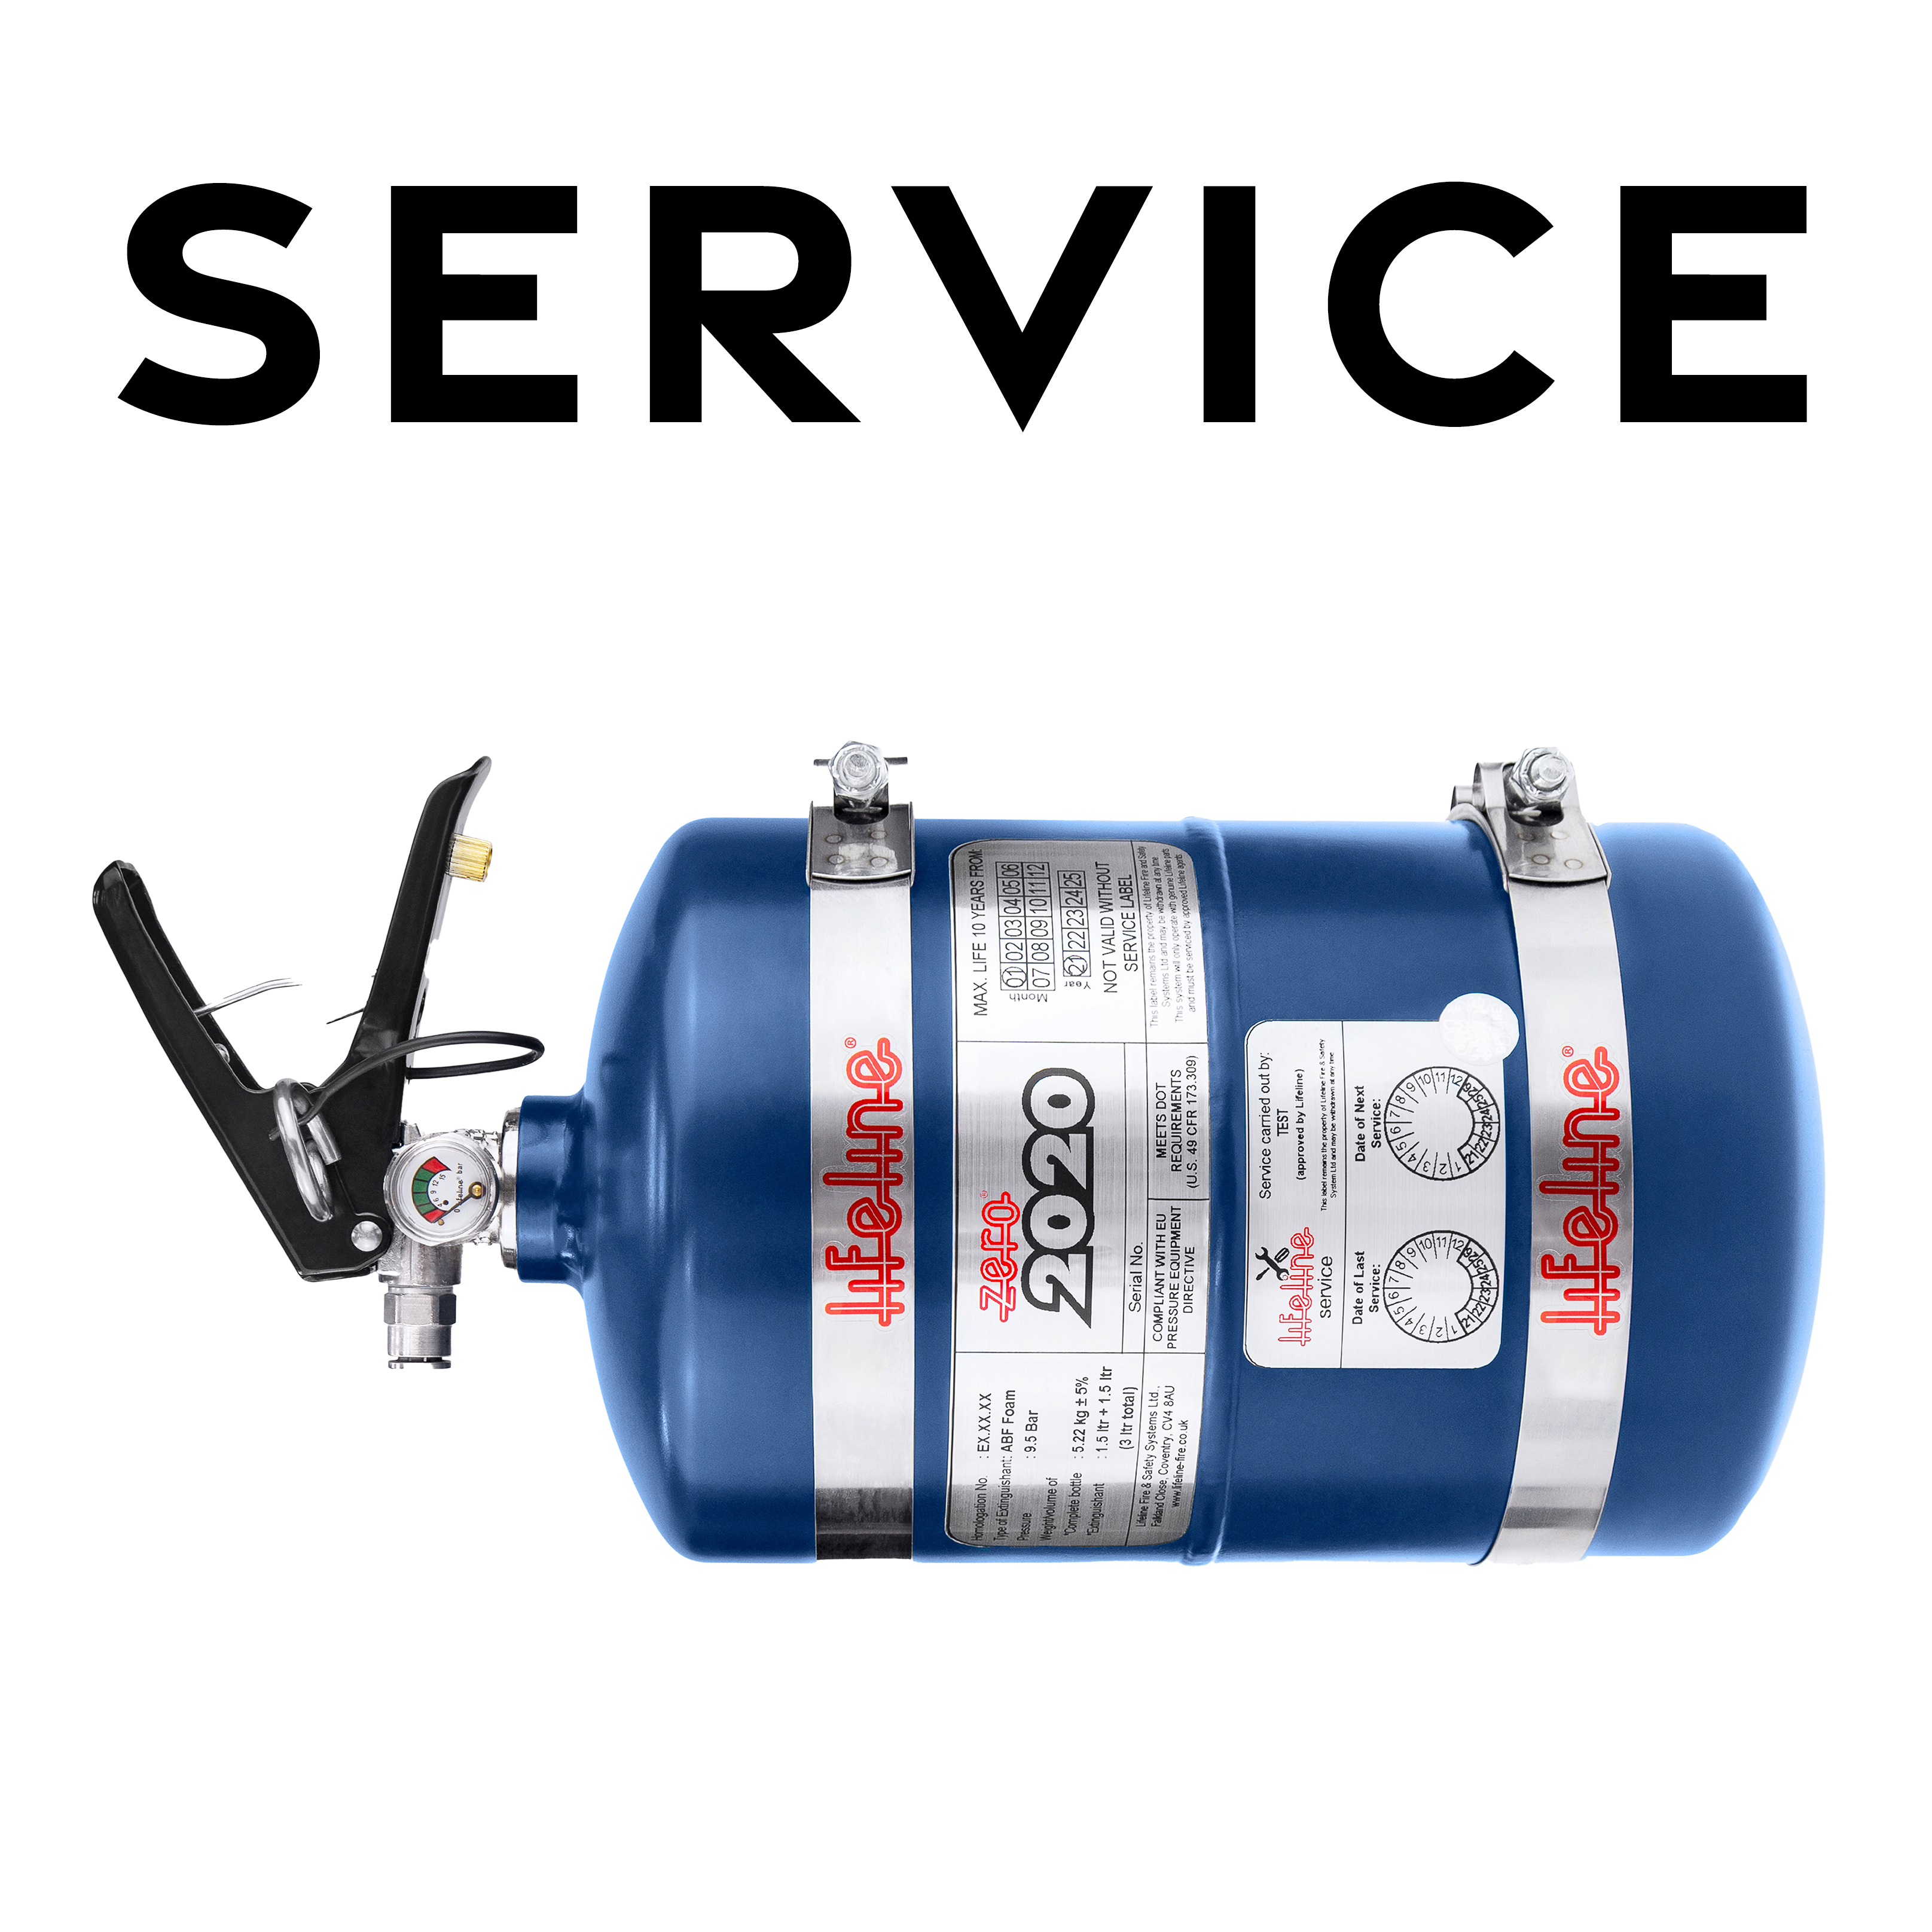 Service - Lifeline Zero 2020 Fire Marshal 3.0 Litre Mechanical Fire Extinguisher 